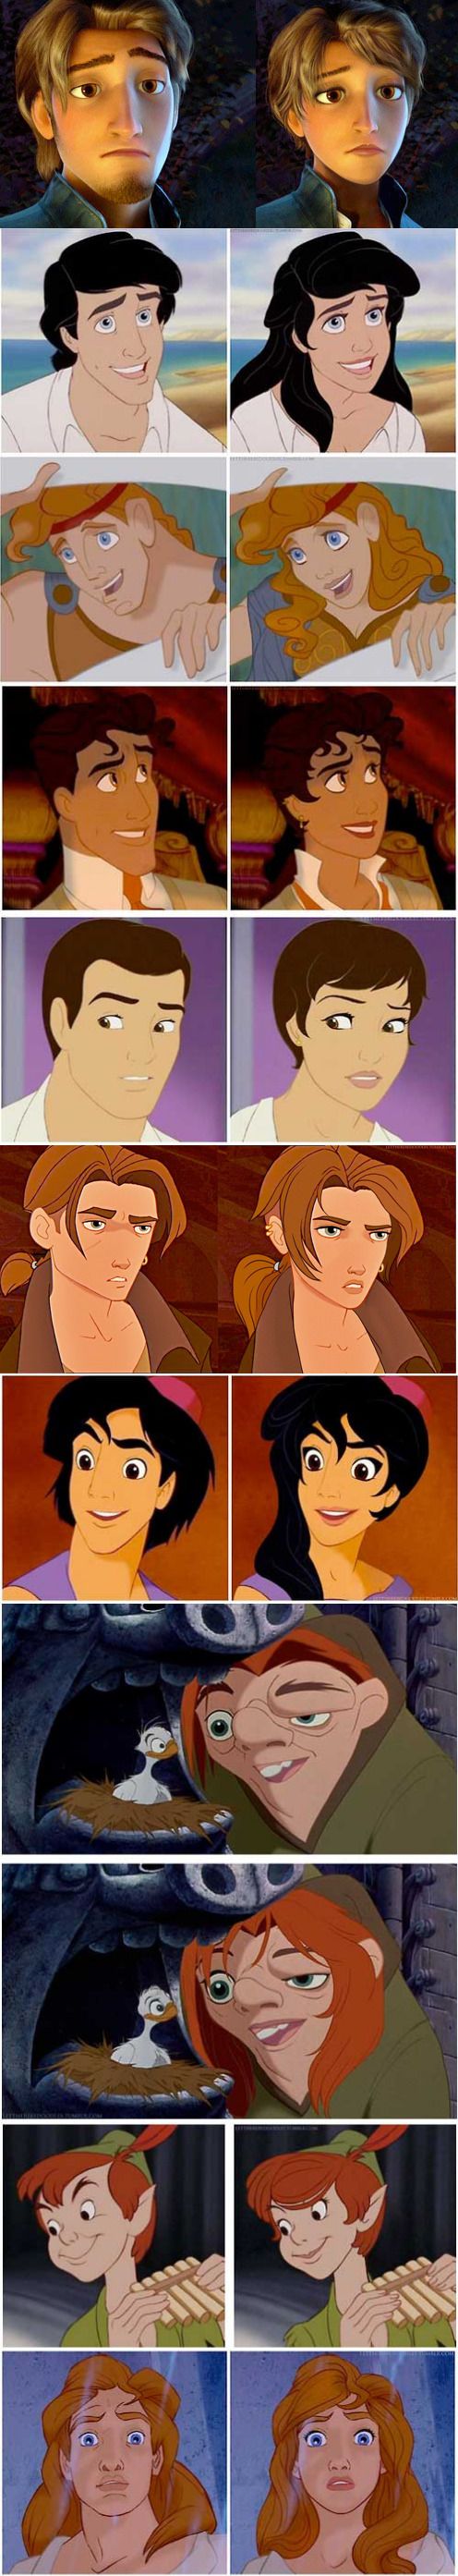 Gender-Bending Disney Characters.